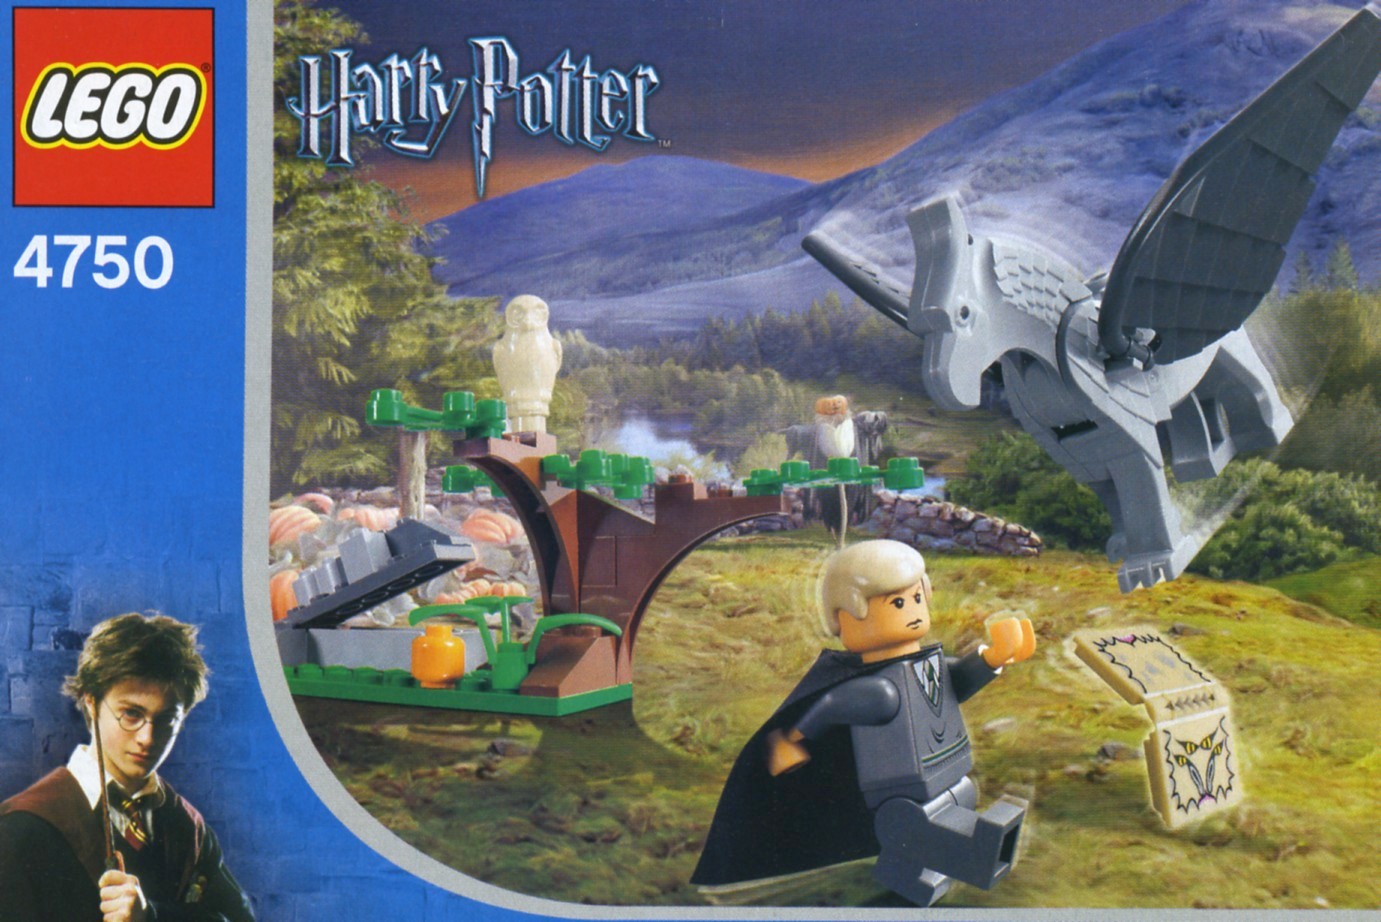 Harry Potter | 2004 | Brickset: LEGO 